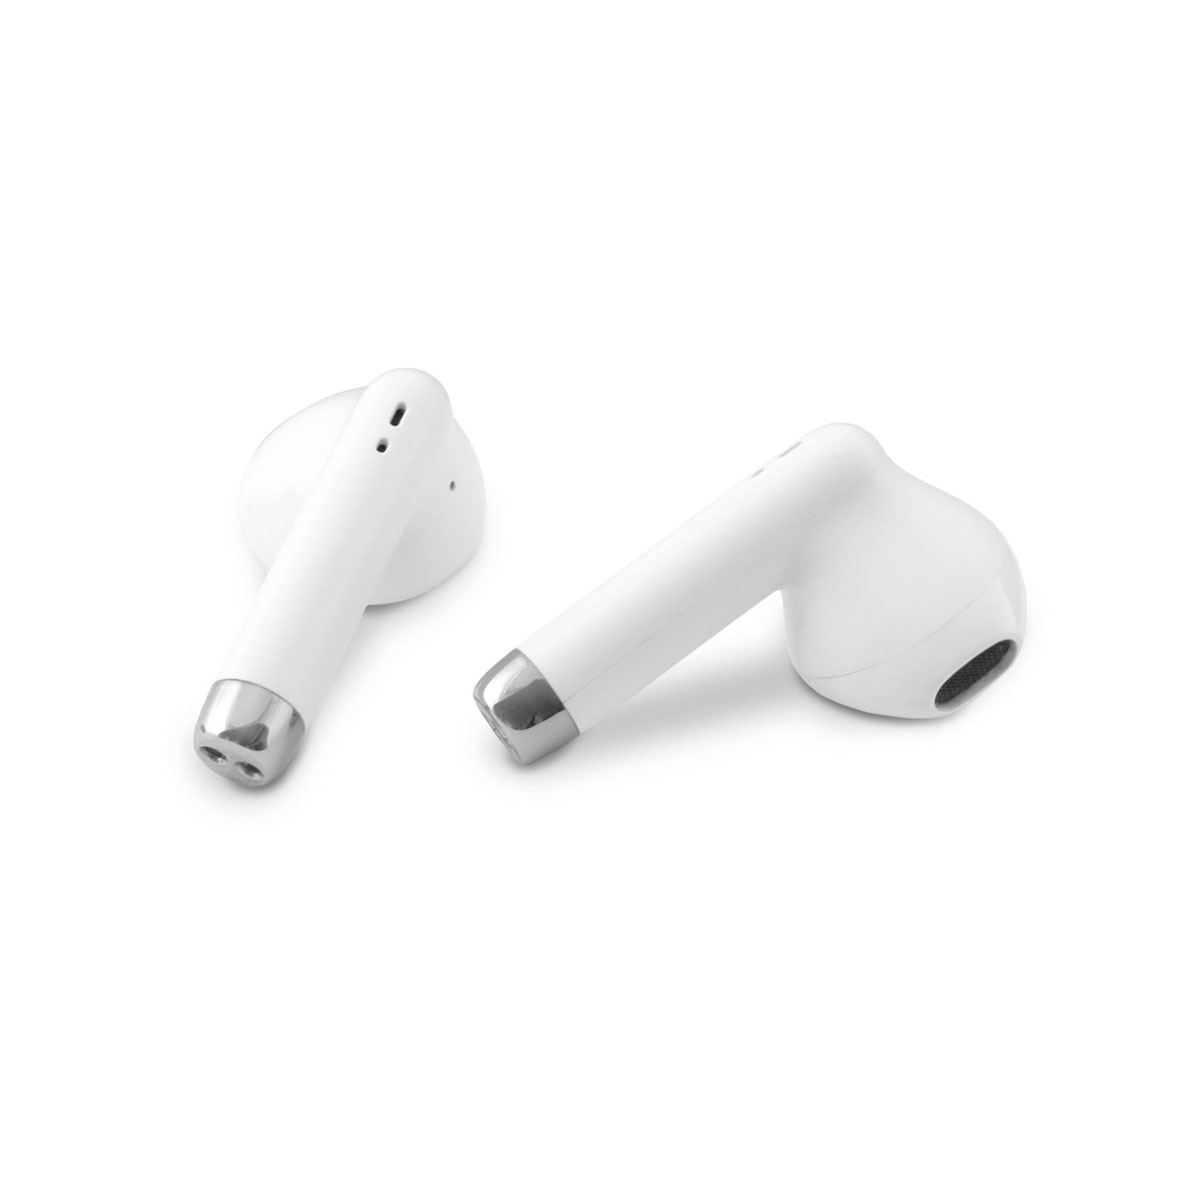 COOLBOX TWS-01, In-ear headphones Bluetooth White Bluetooth